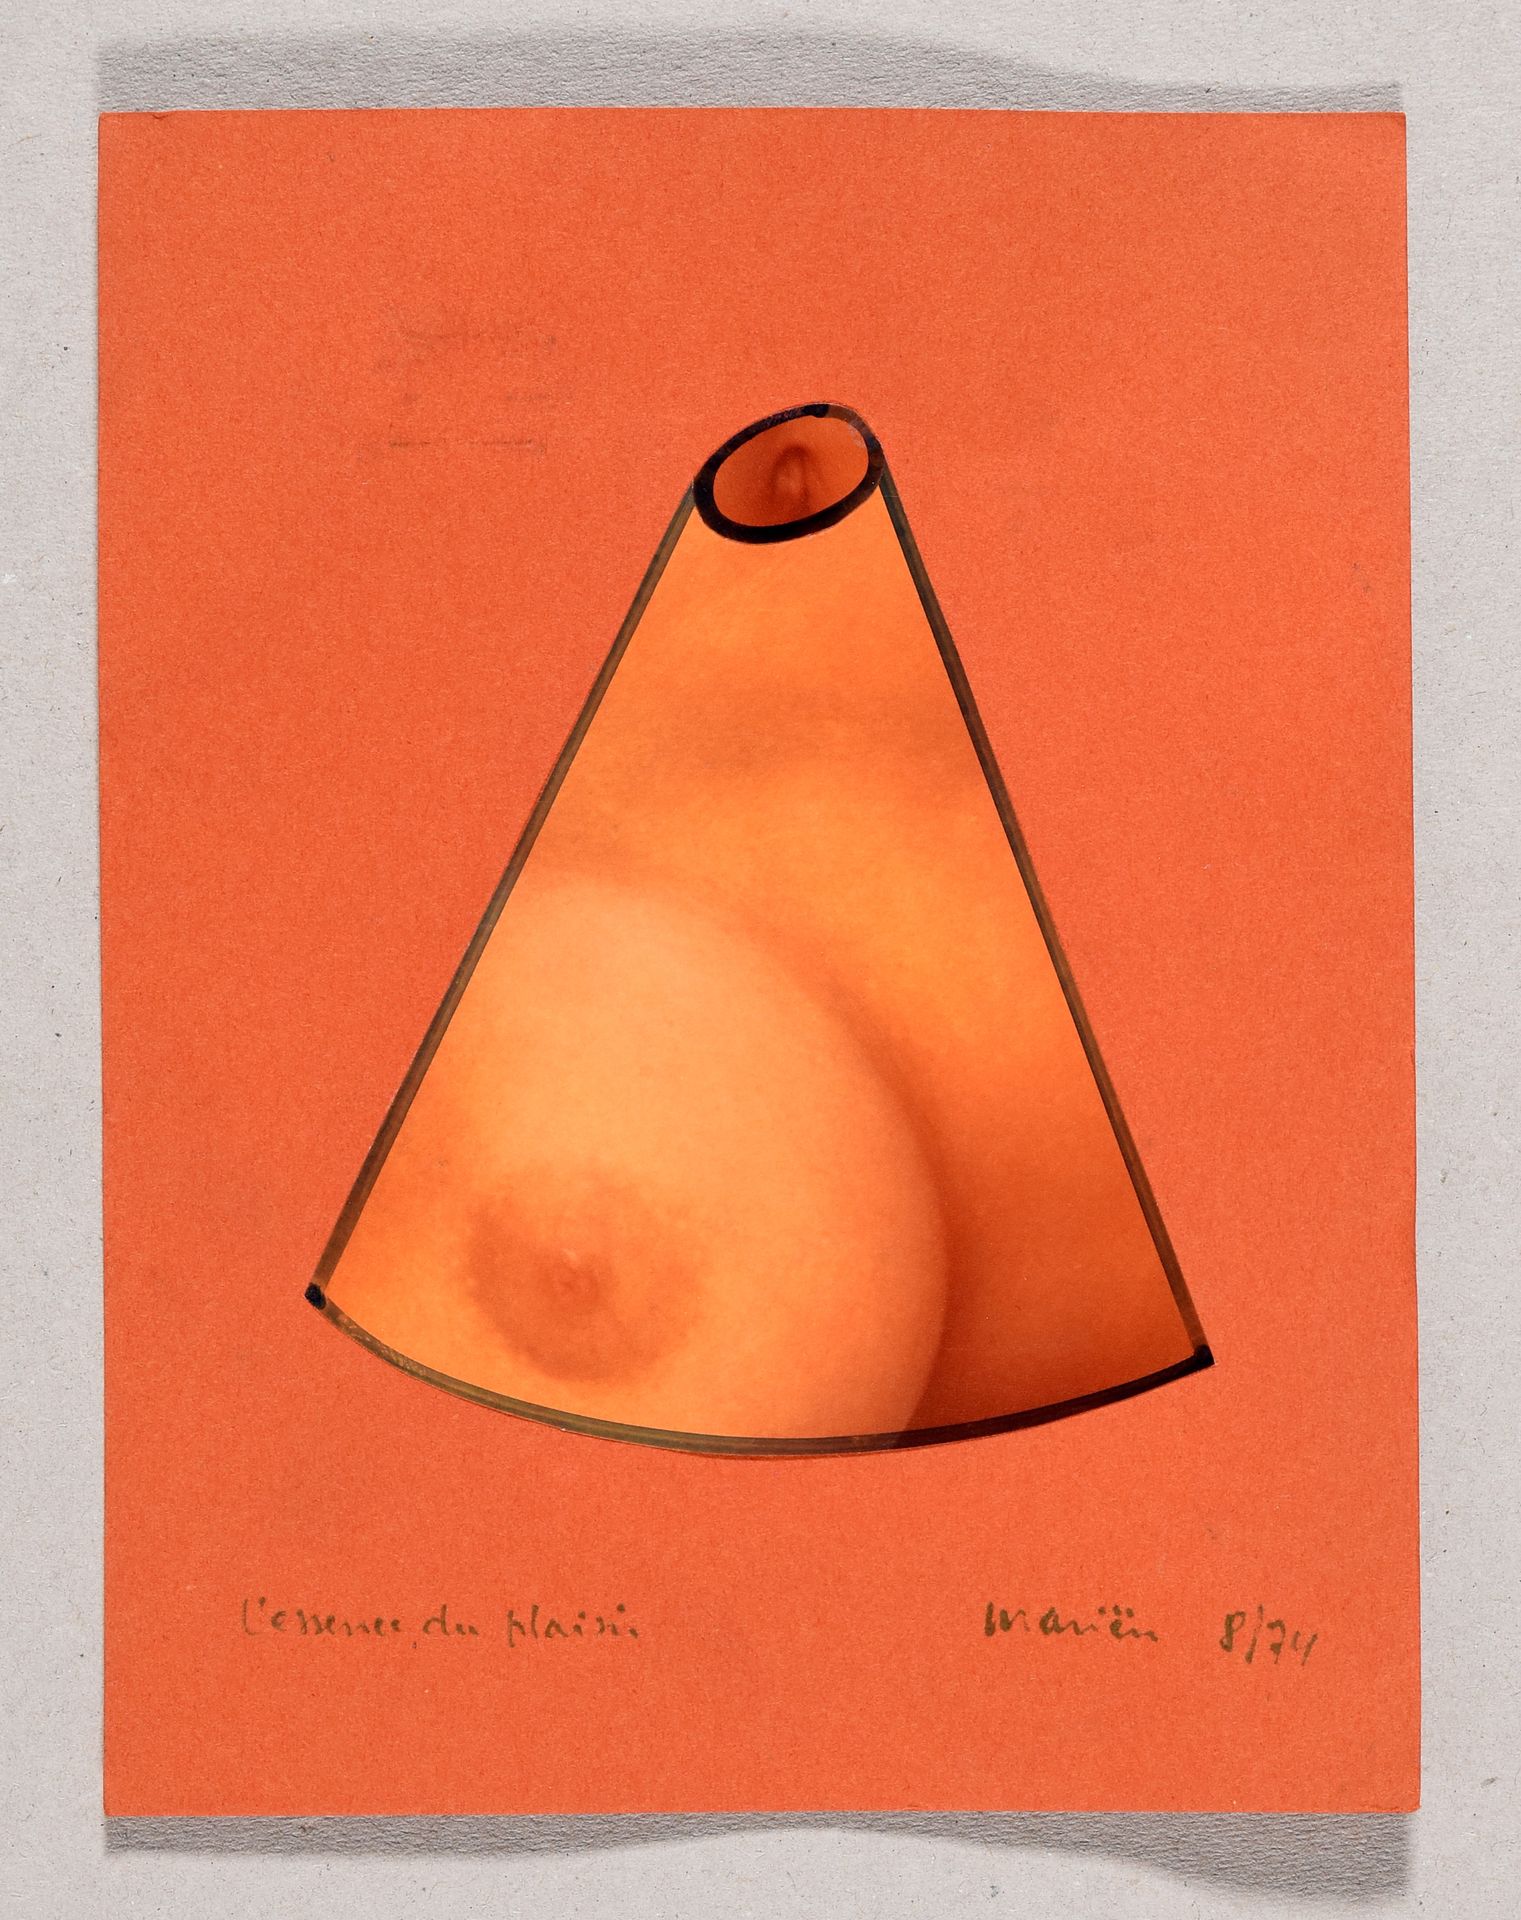 Mariën, Marcel 马里恩，马塞尔，《快乐的本质》（L'essence du plaisir）。1974年 橙色纸上的摄影拼贴画，19 x 14.5厘&hellip;